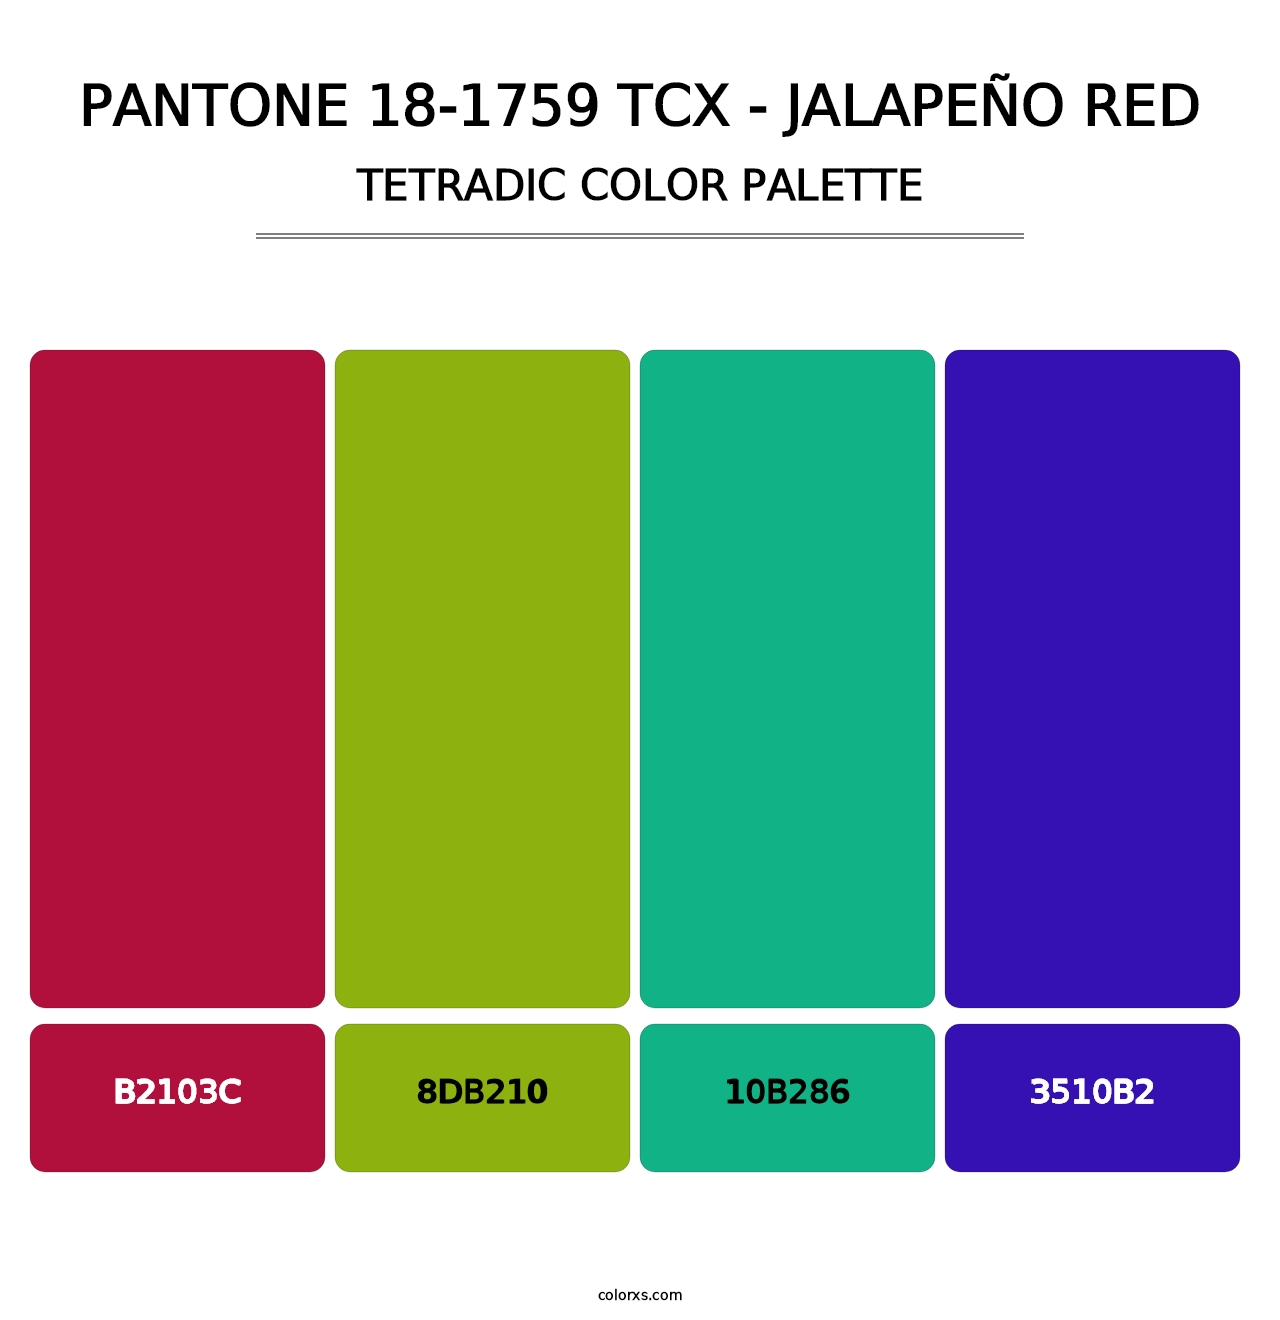 PANTONE 18-1759 TCX - Jalapeño Red - Tetradic Color Palette